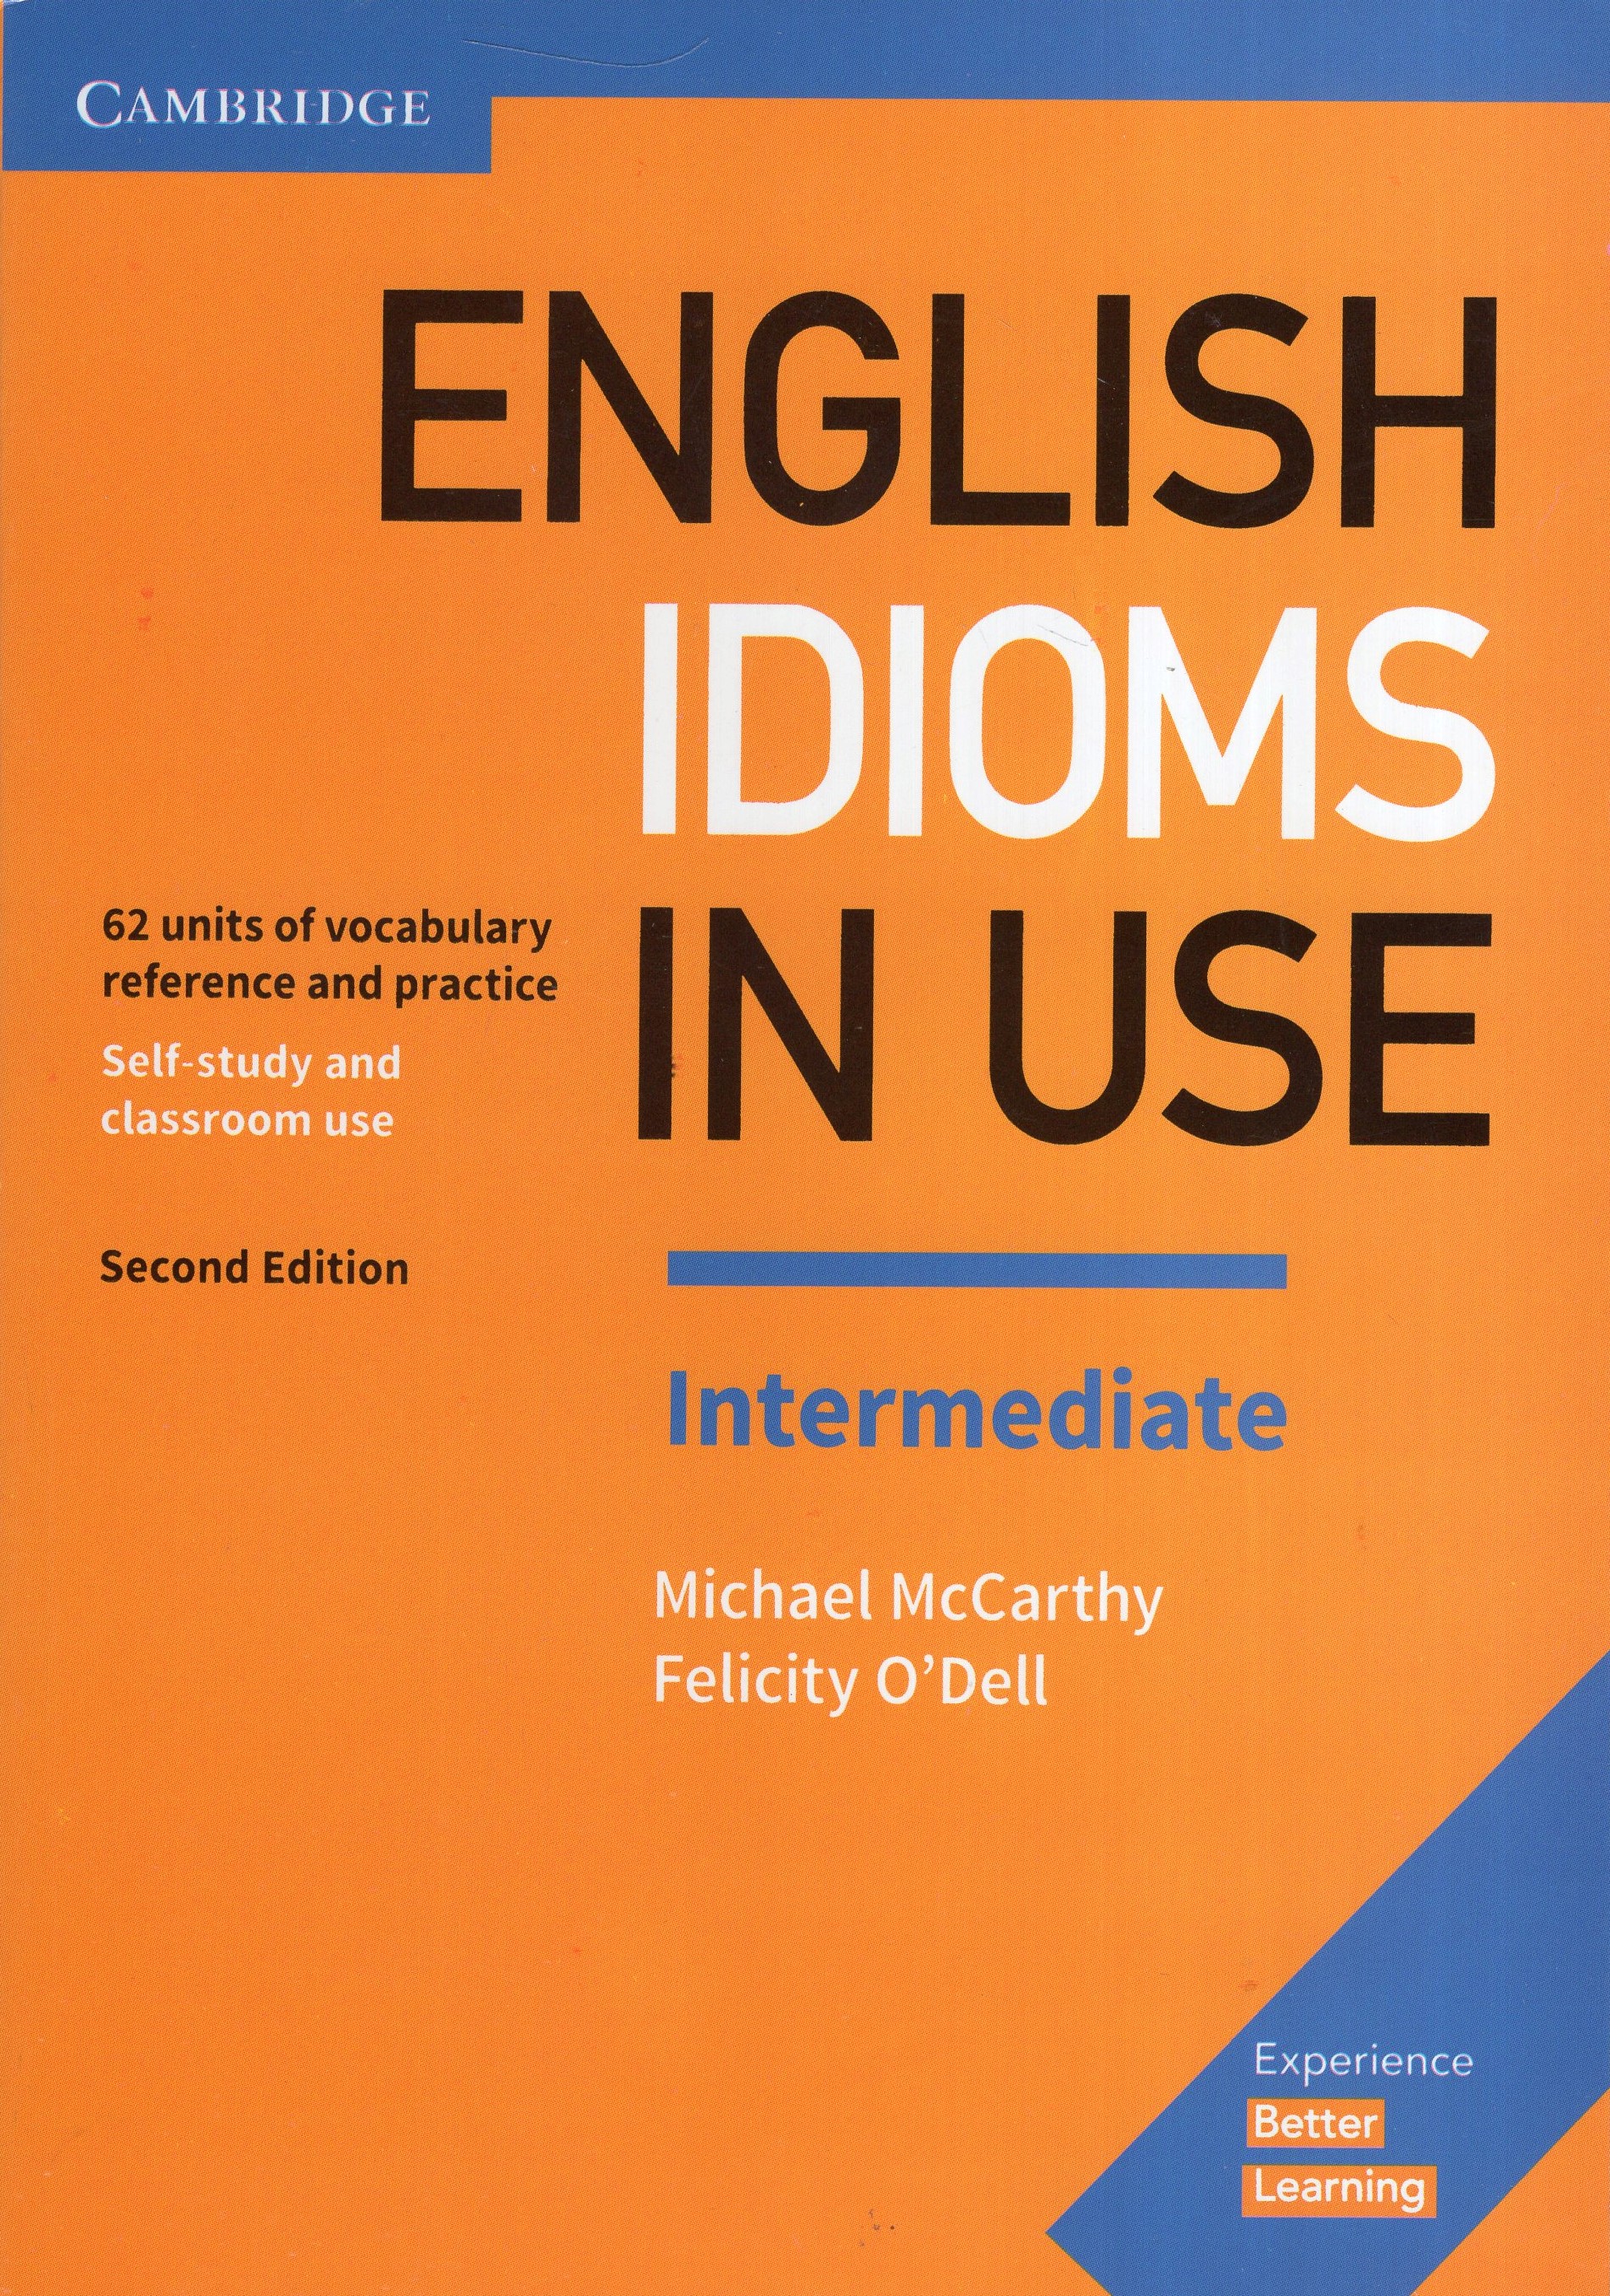 English Idioms in Use 2nd Edition Intermediate(Cambridge)